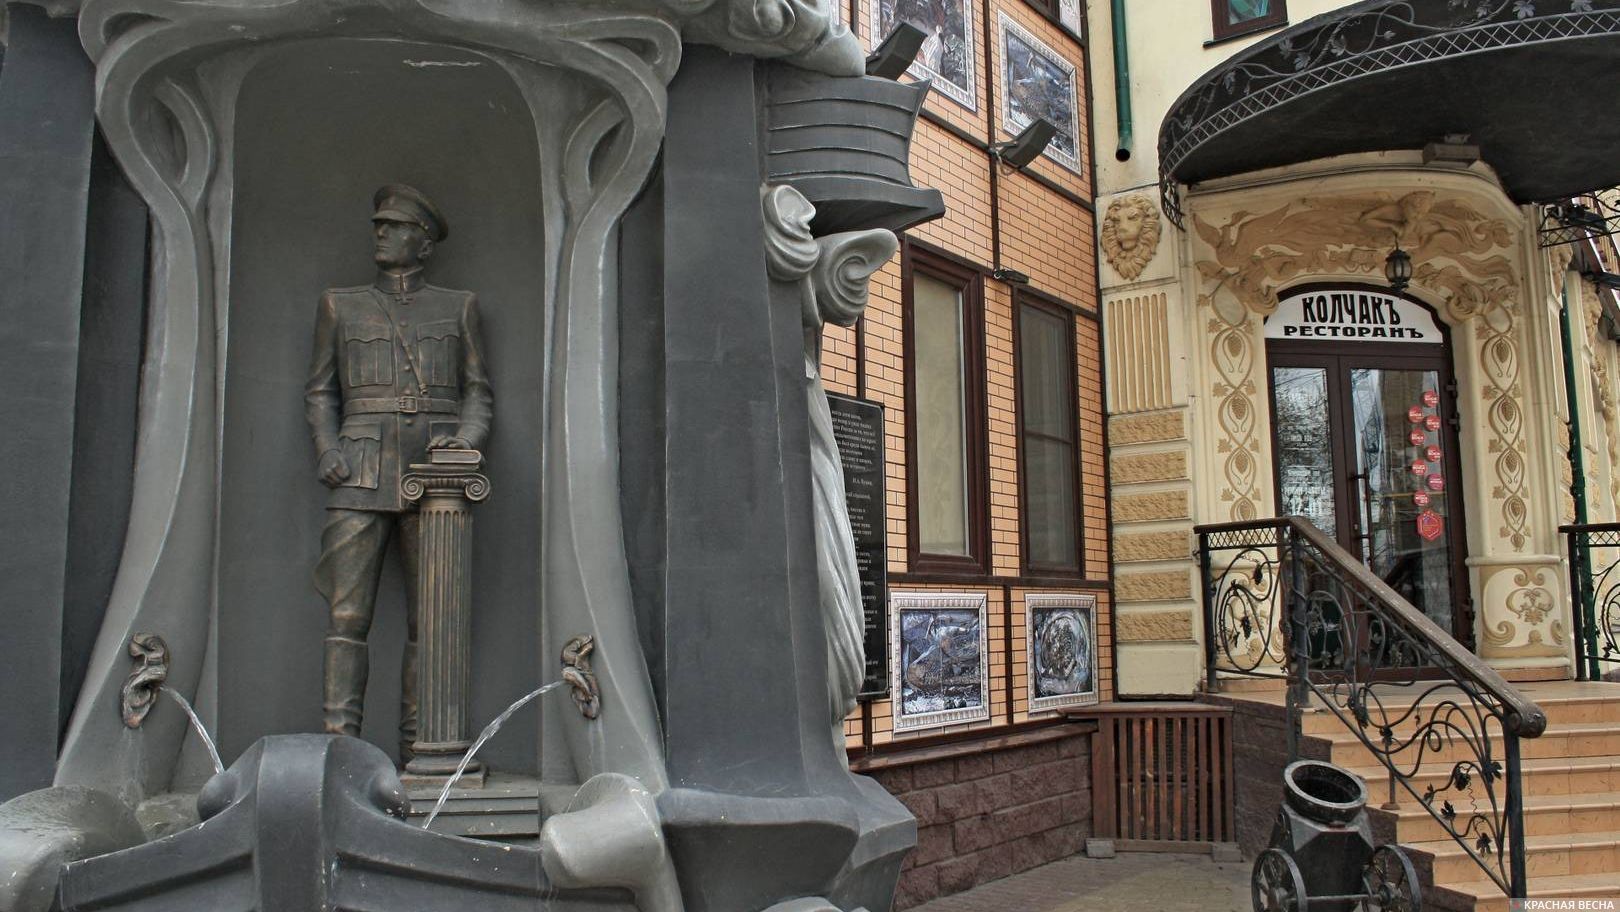 Статуя А.В. Колчака у ресторана «Колчак». Омск